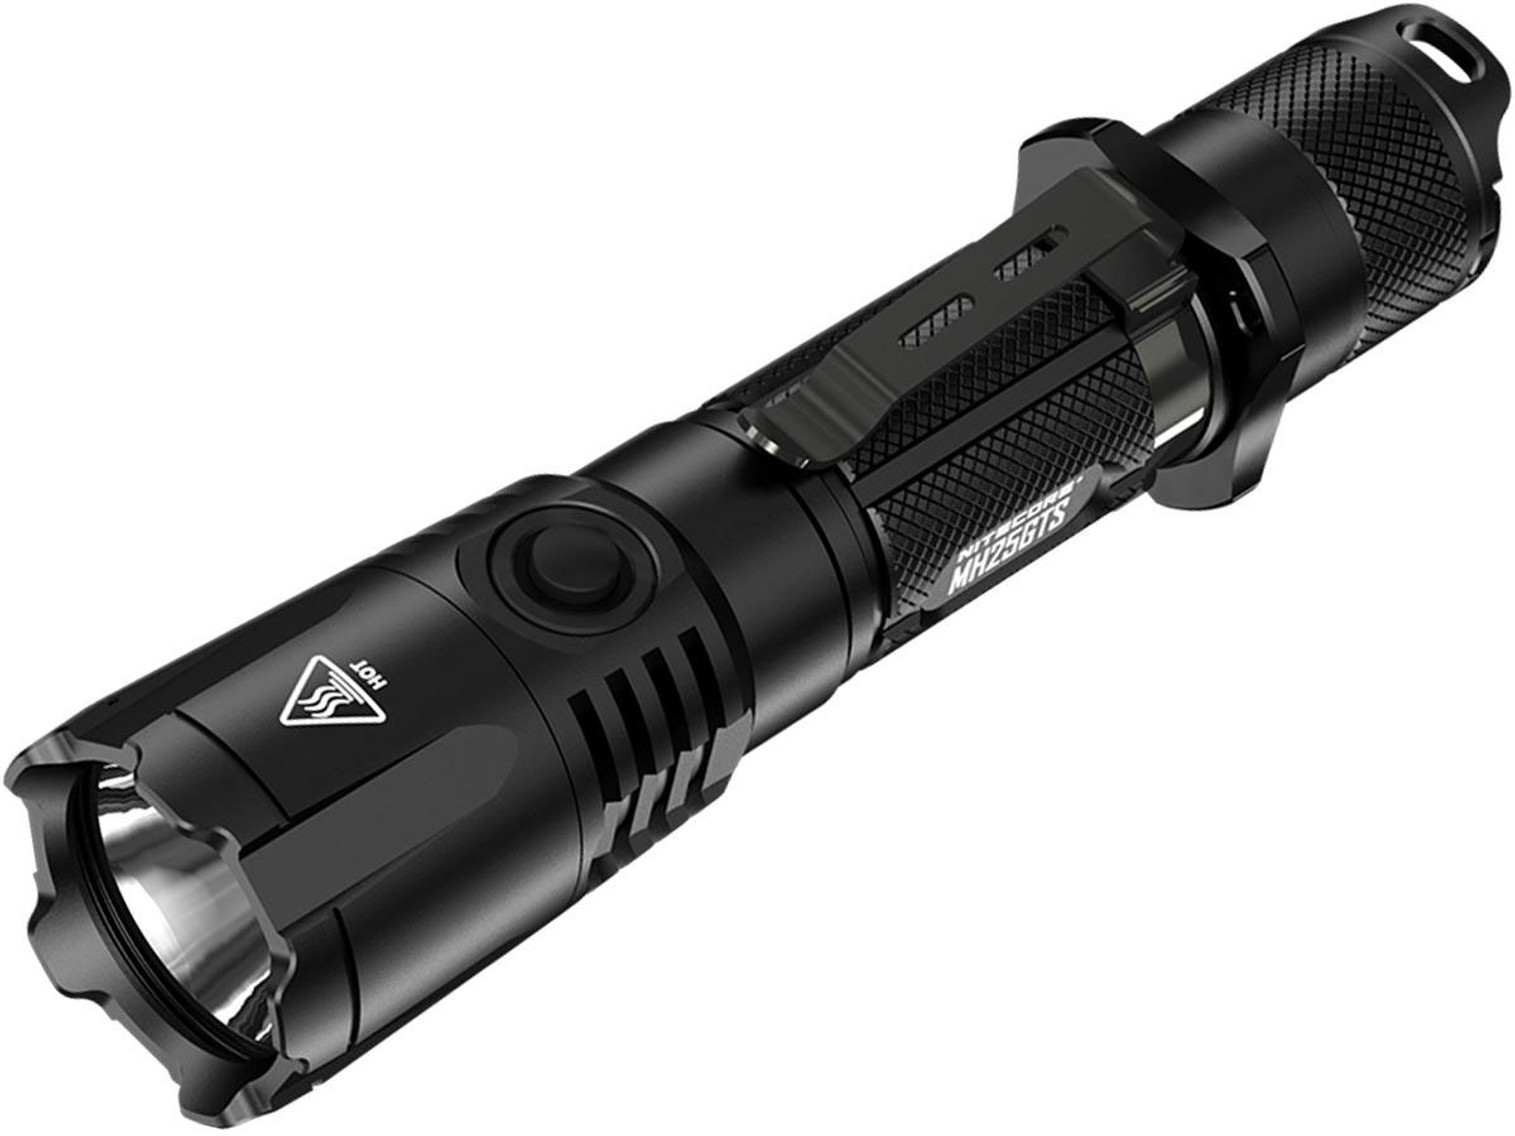 NiteCore MH25GTS 1800 Lumen USB Rechargeable Tactical Flashlight